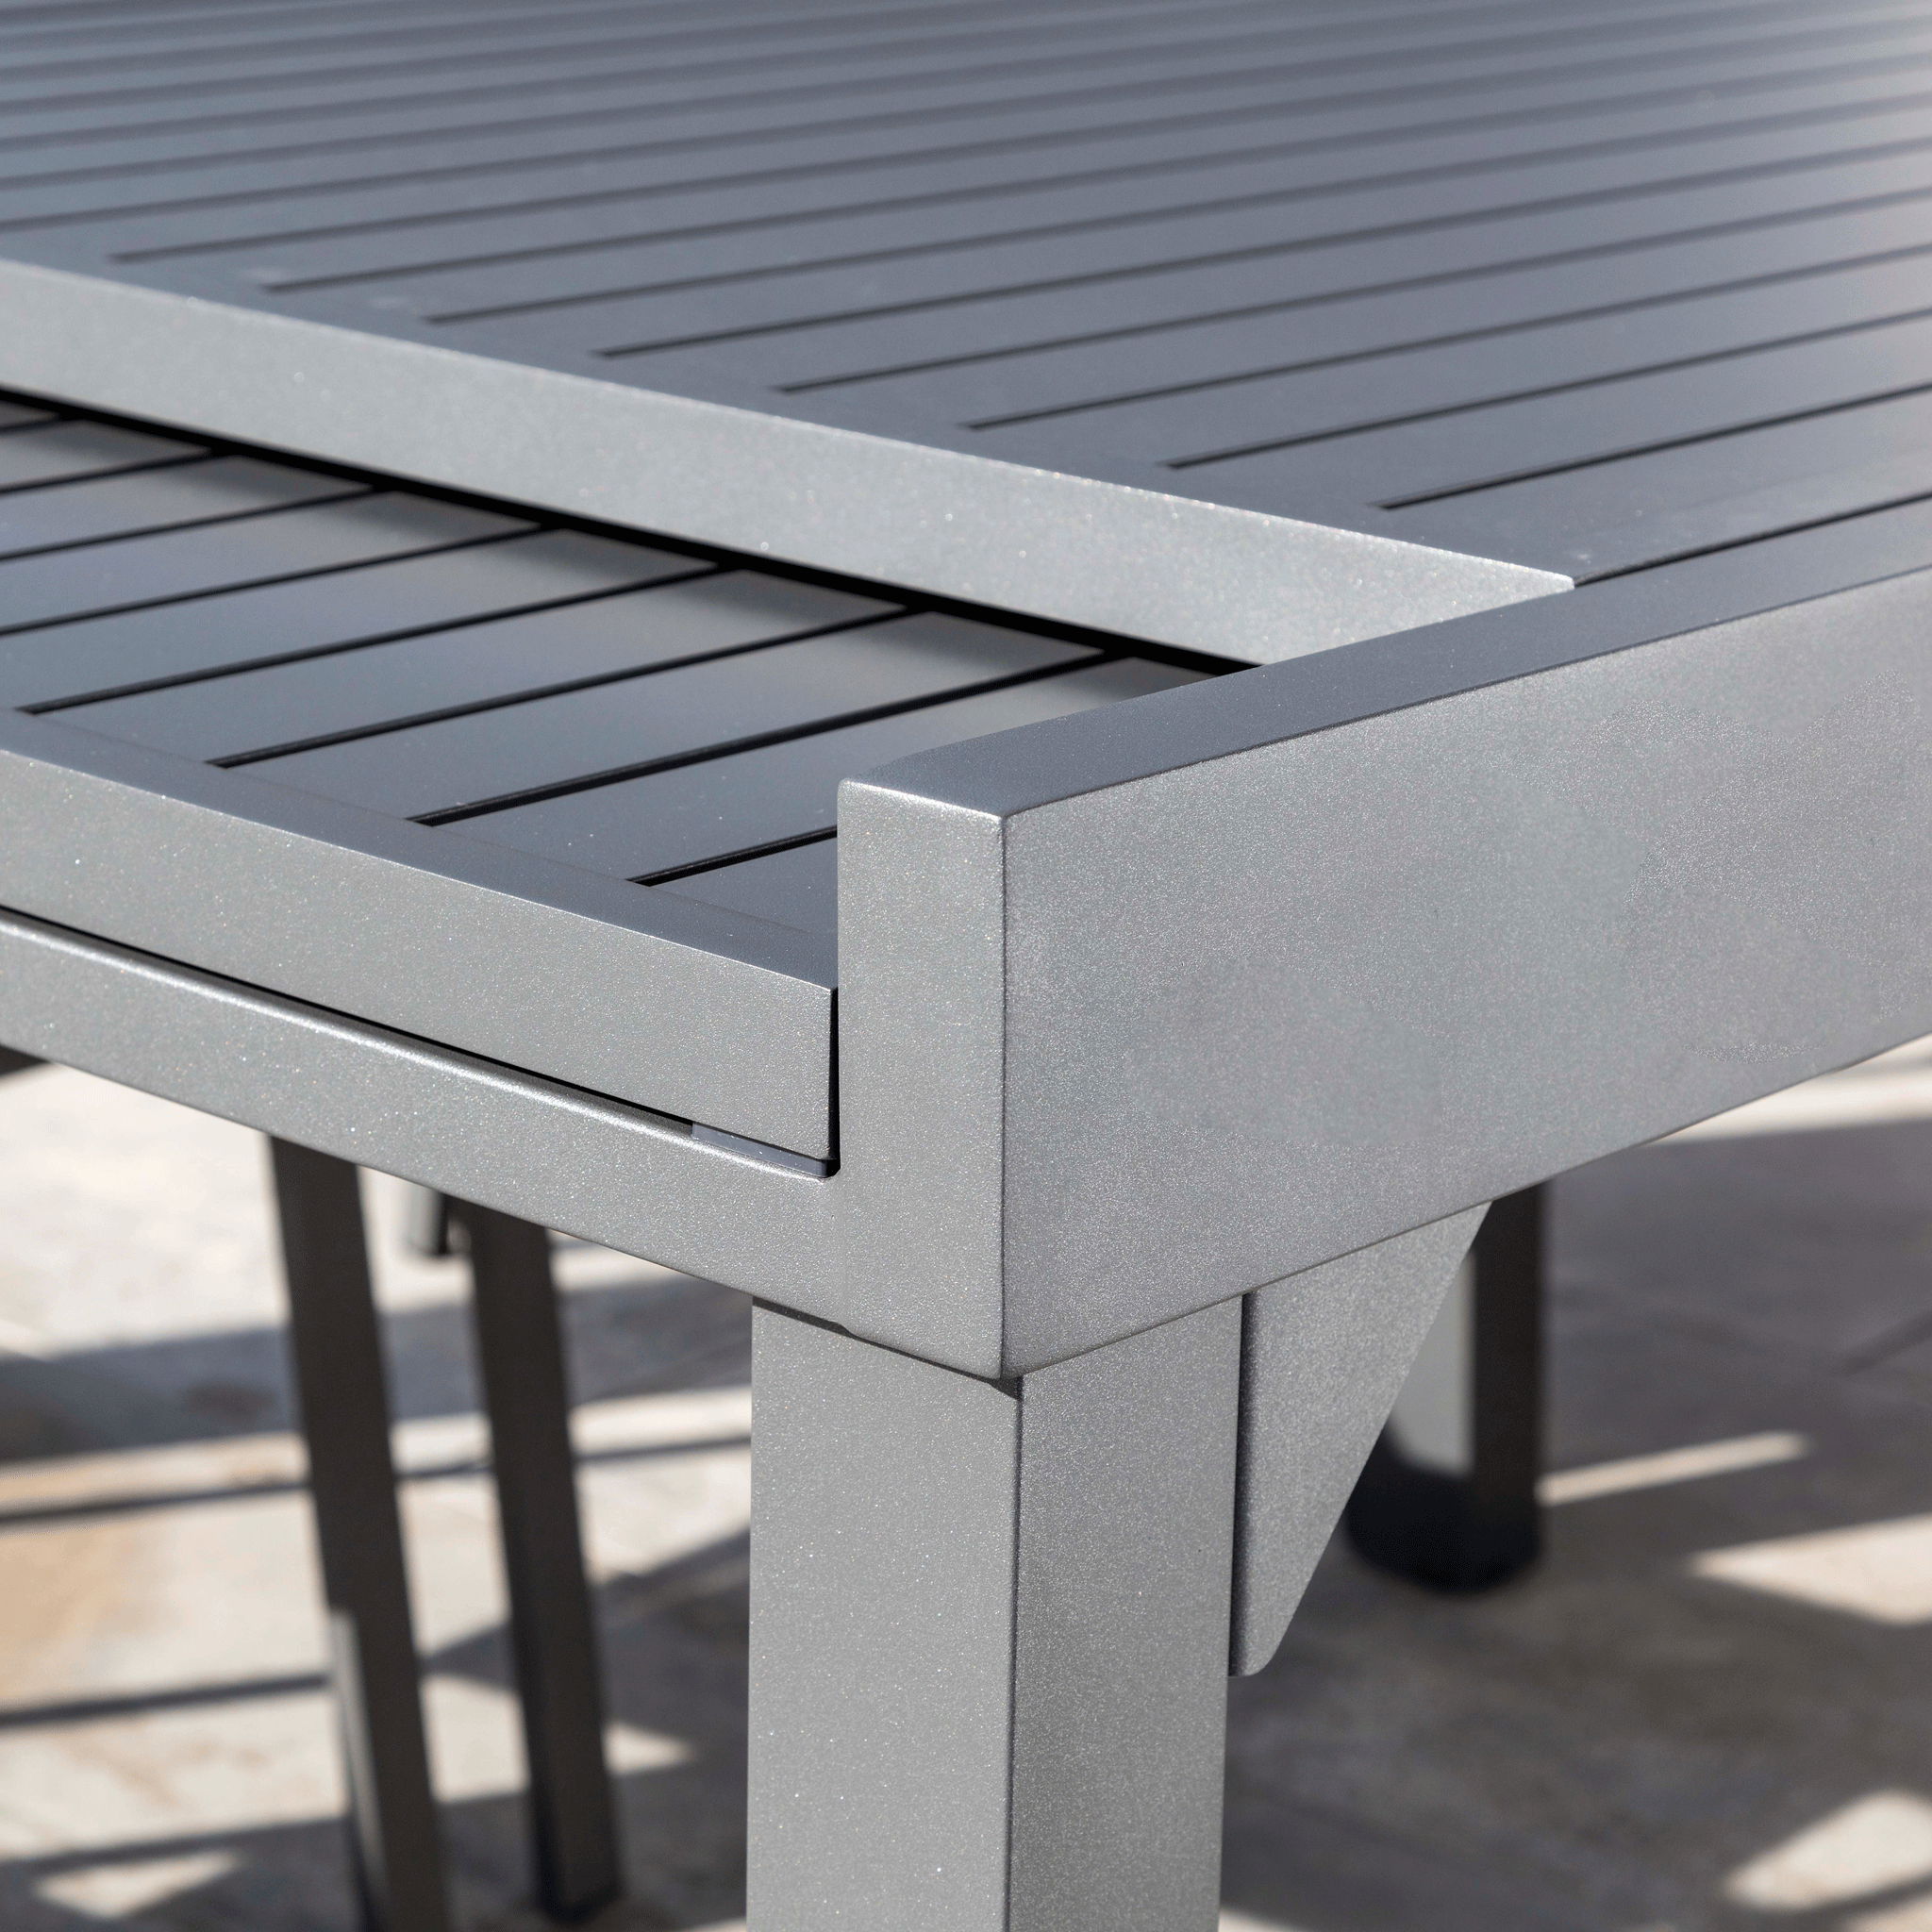 Table de jardin extensible 10 places Aluminium Murano (270 x 90 cm